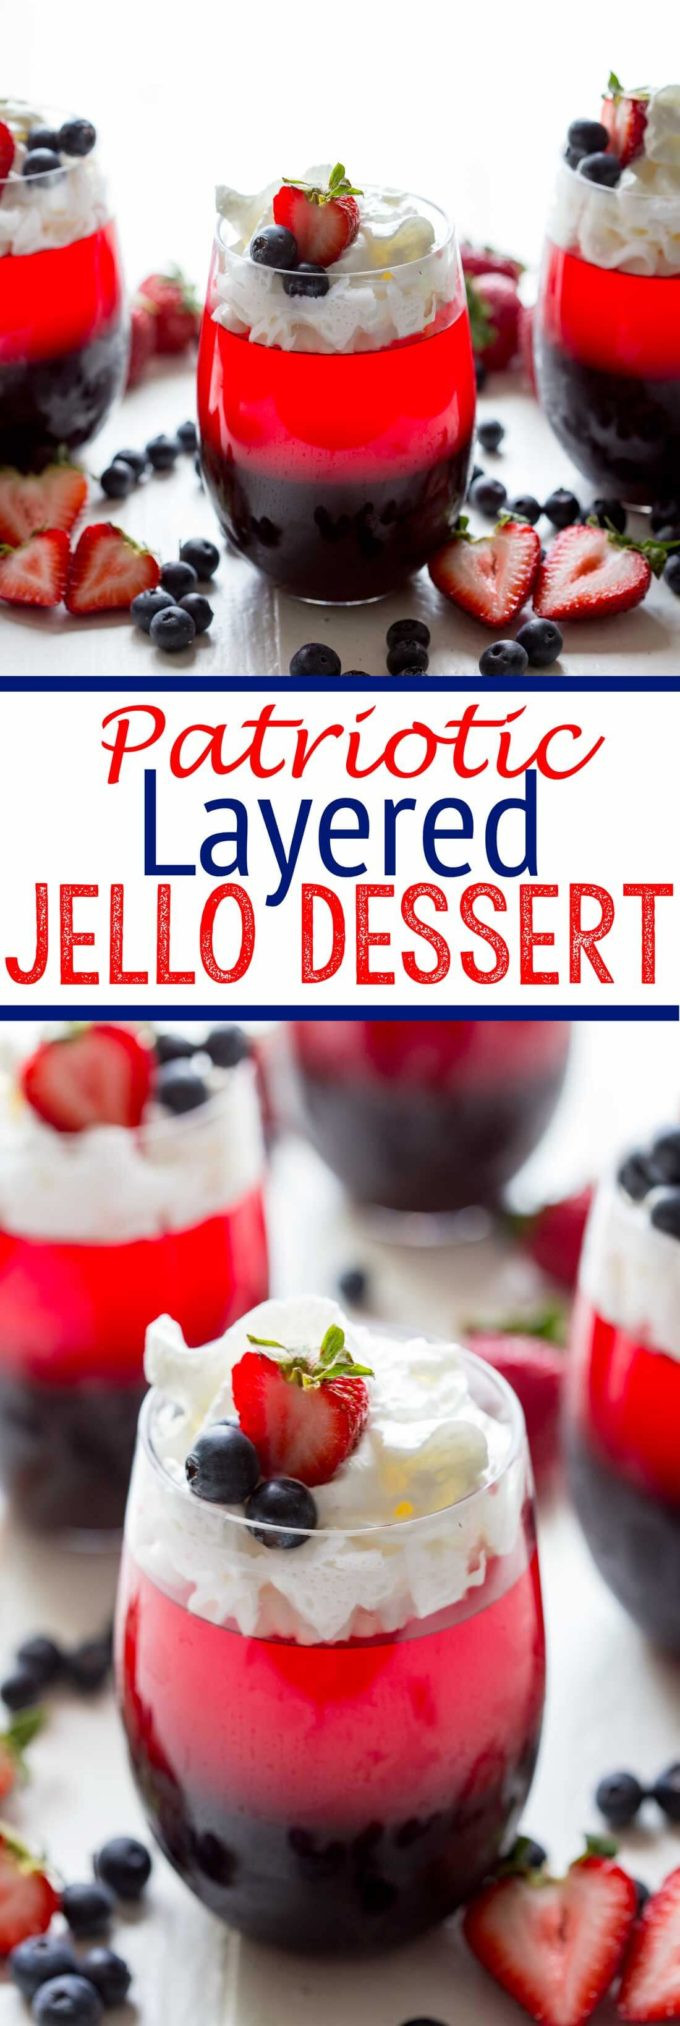 Jello Dessert Recipes
 Patriotic Layered Jello Dessert Easy Peasy Meals